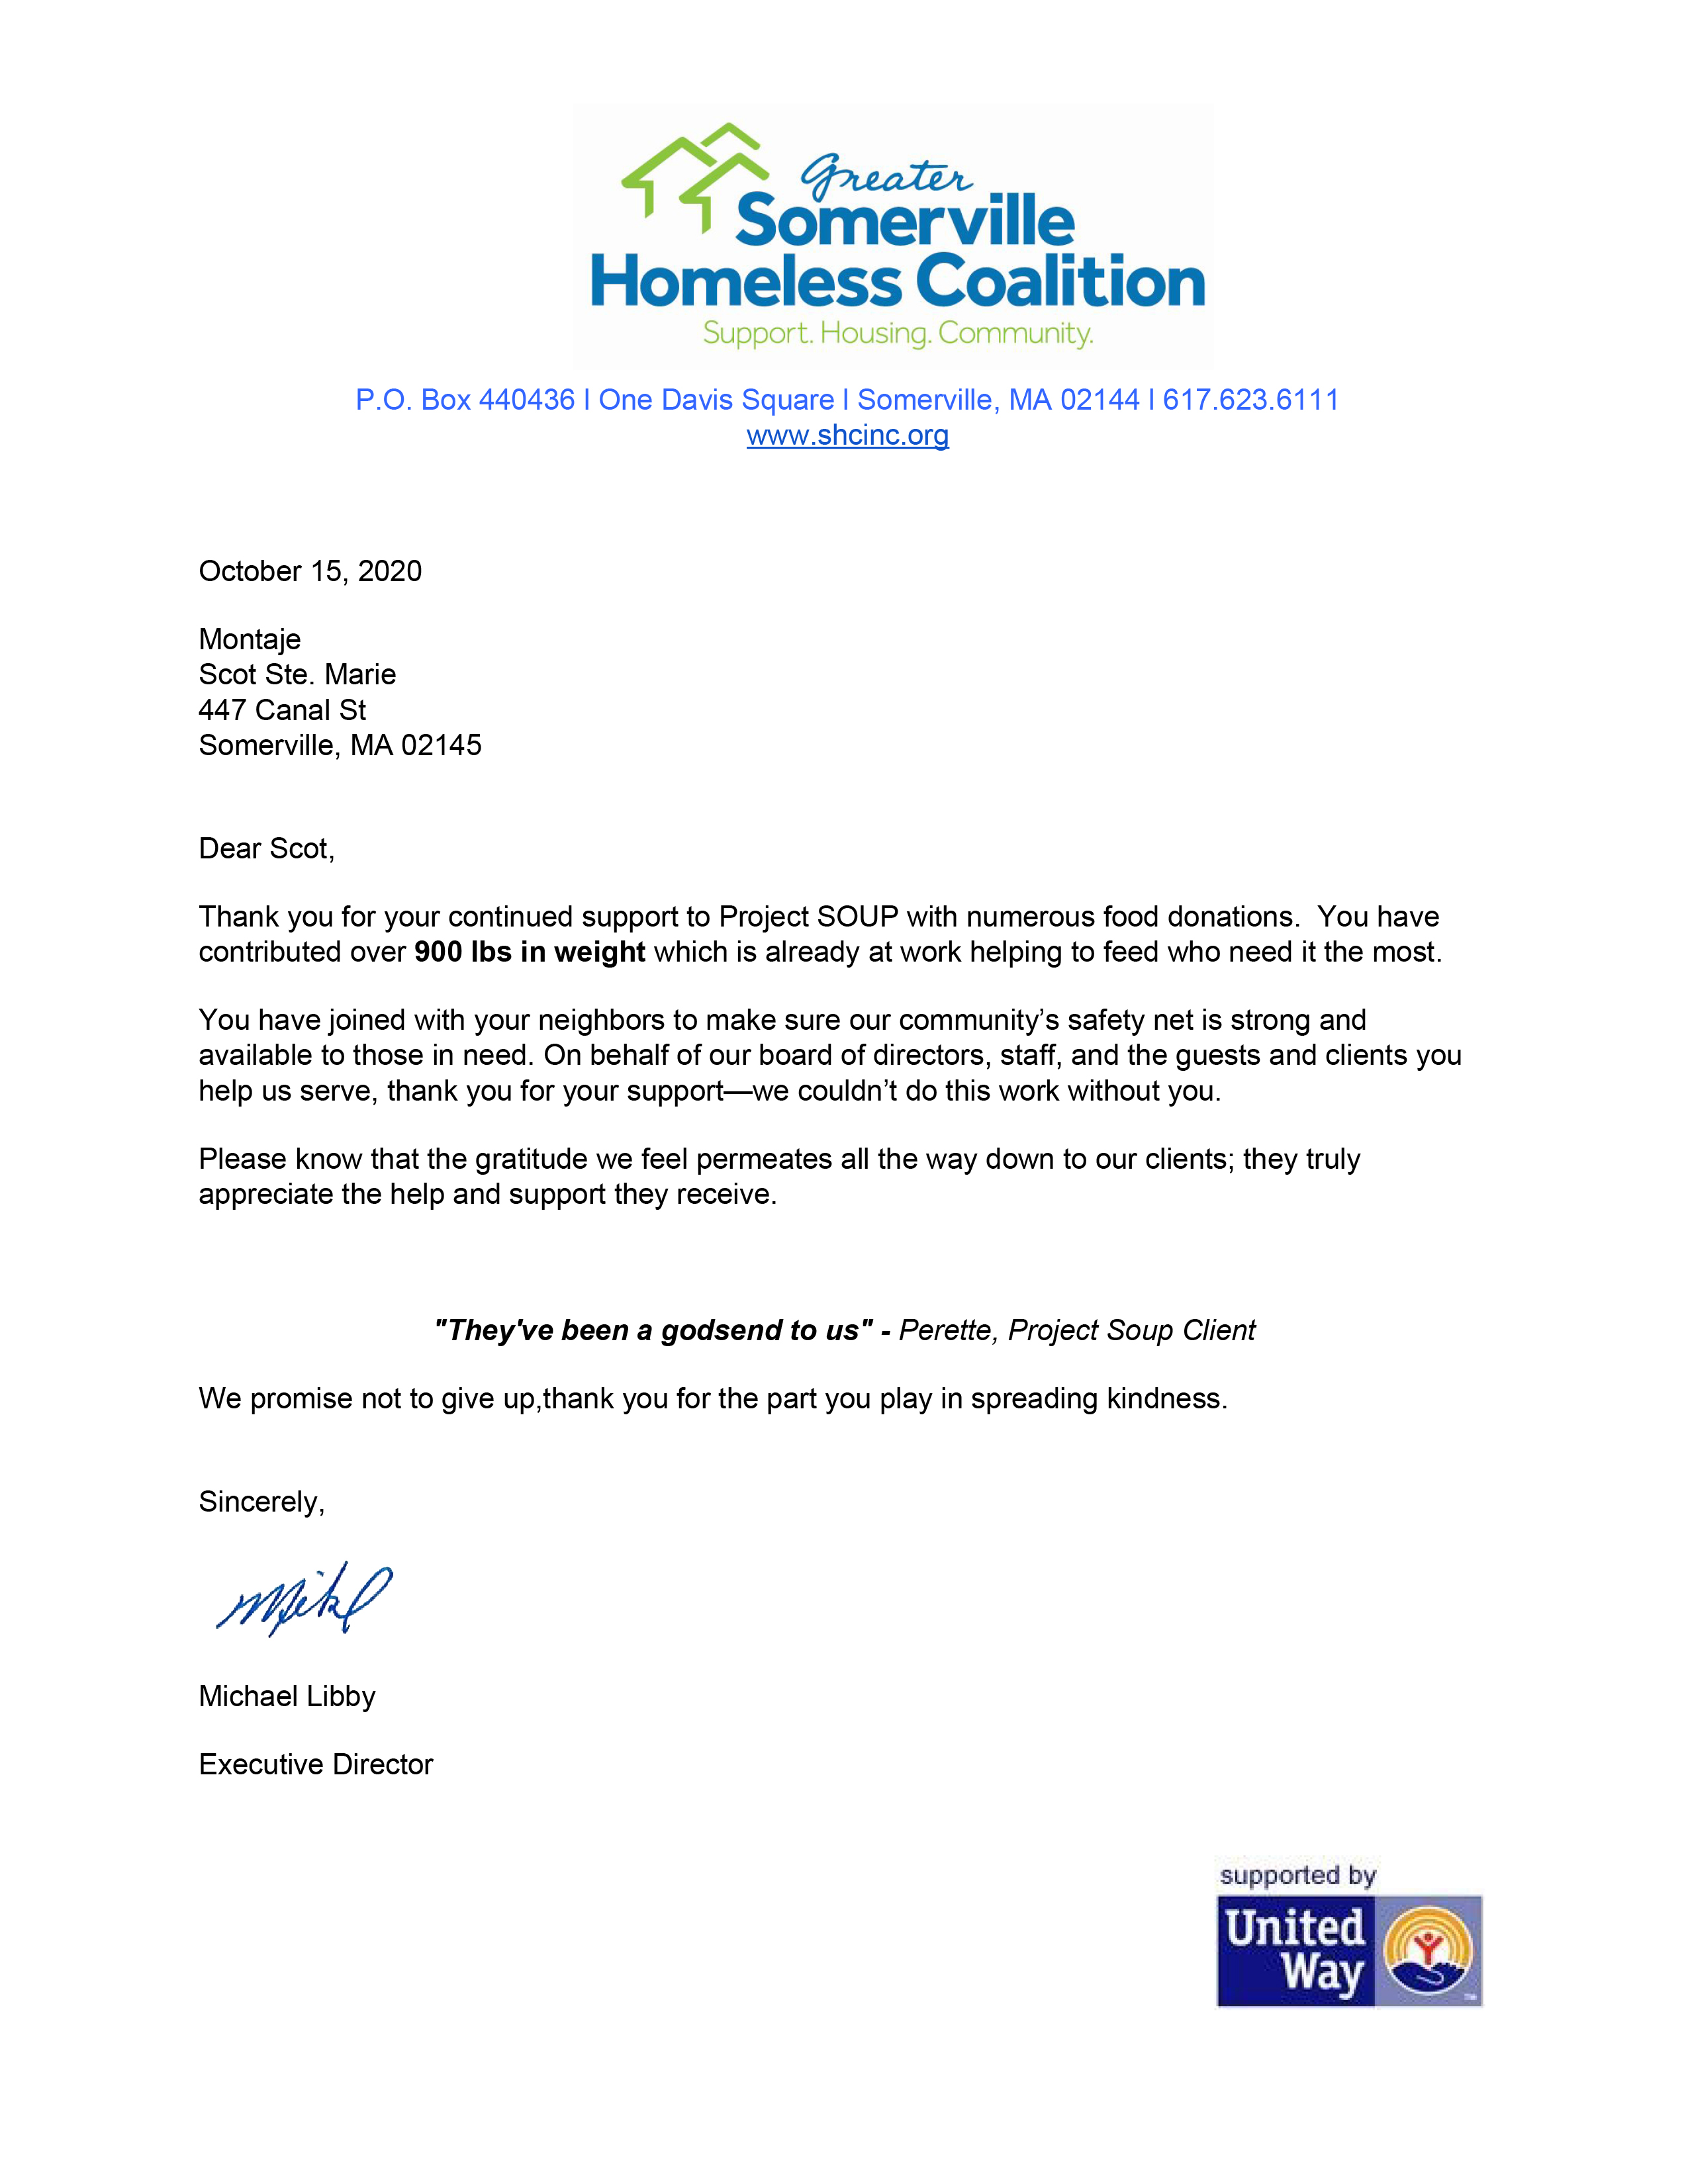 Somerville Homeless Coalition Image 1